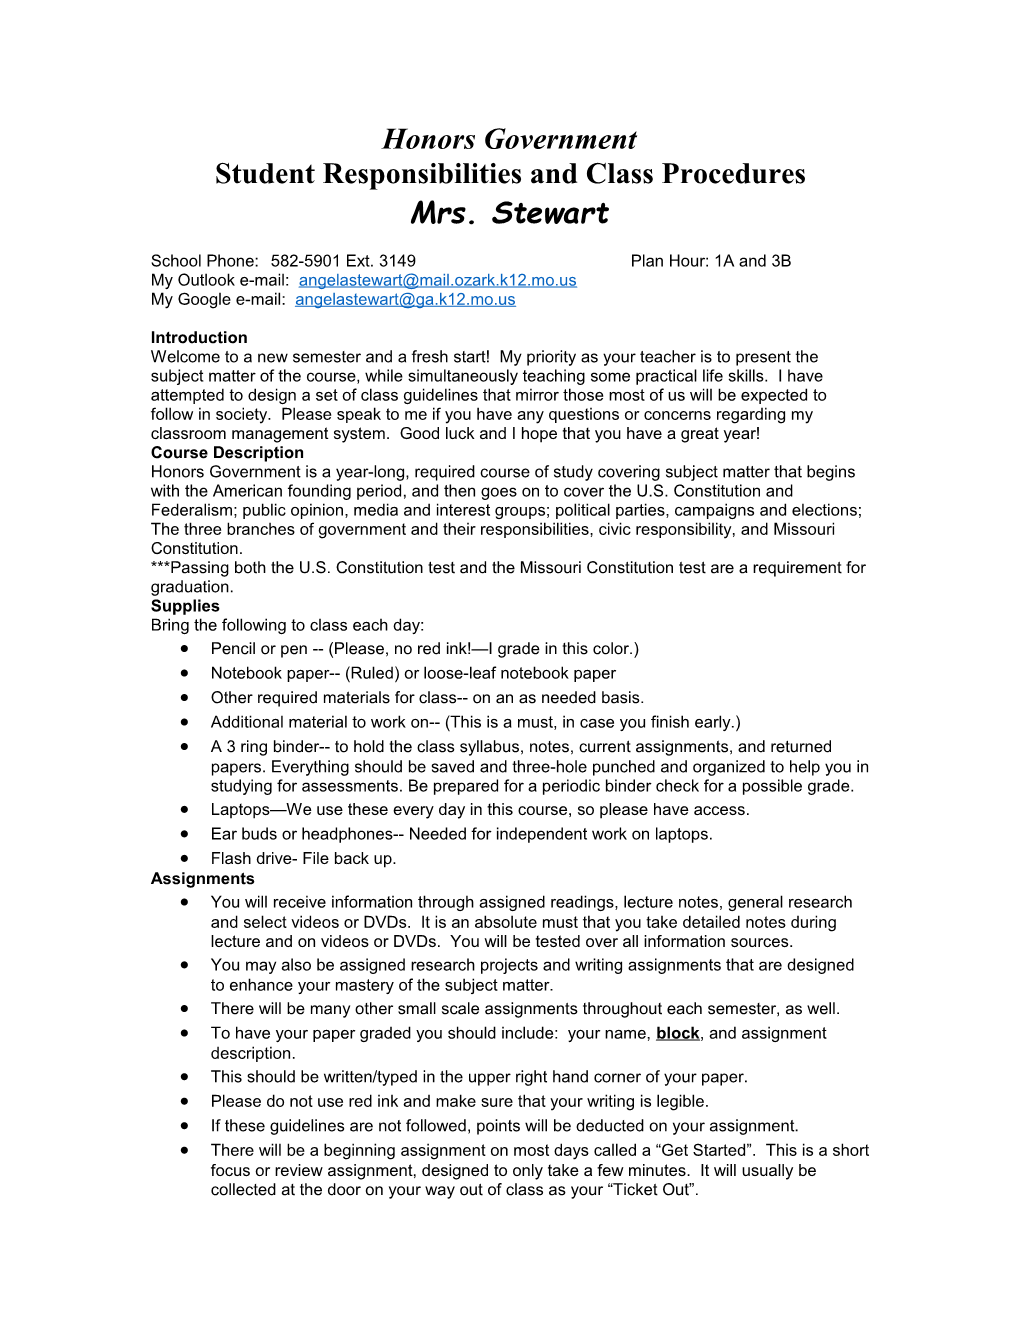 Student Responsibilities and Class Procedures